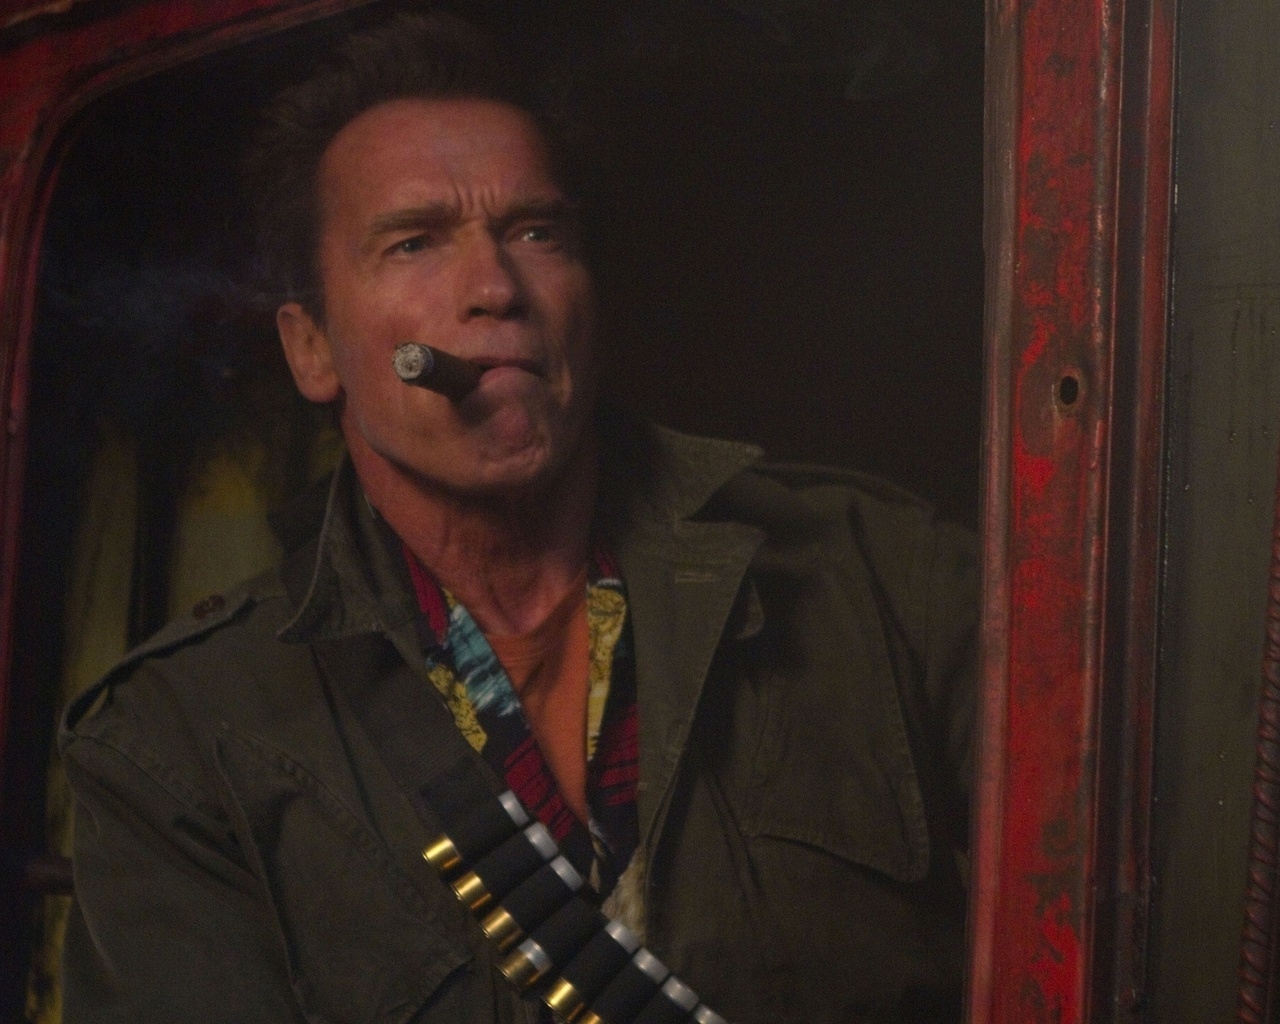 Arnold Schwarzenegger Cigar for 1280 x 1024 resolution